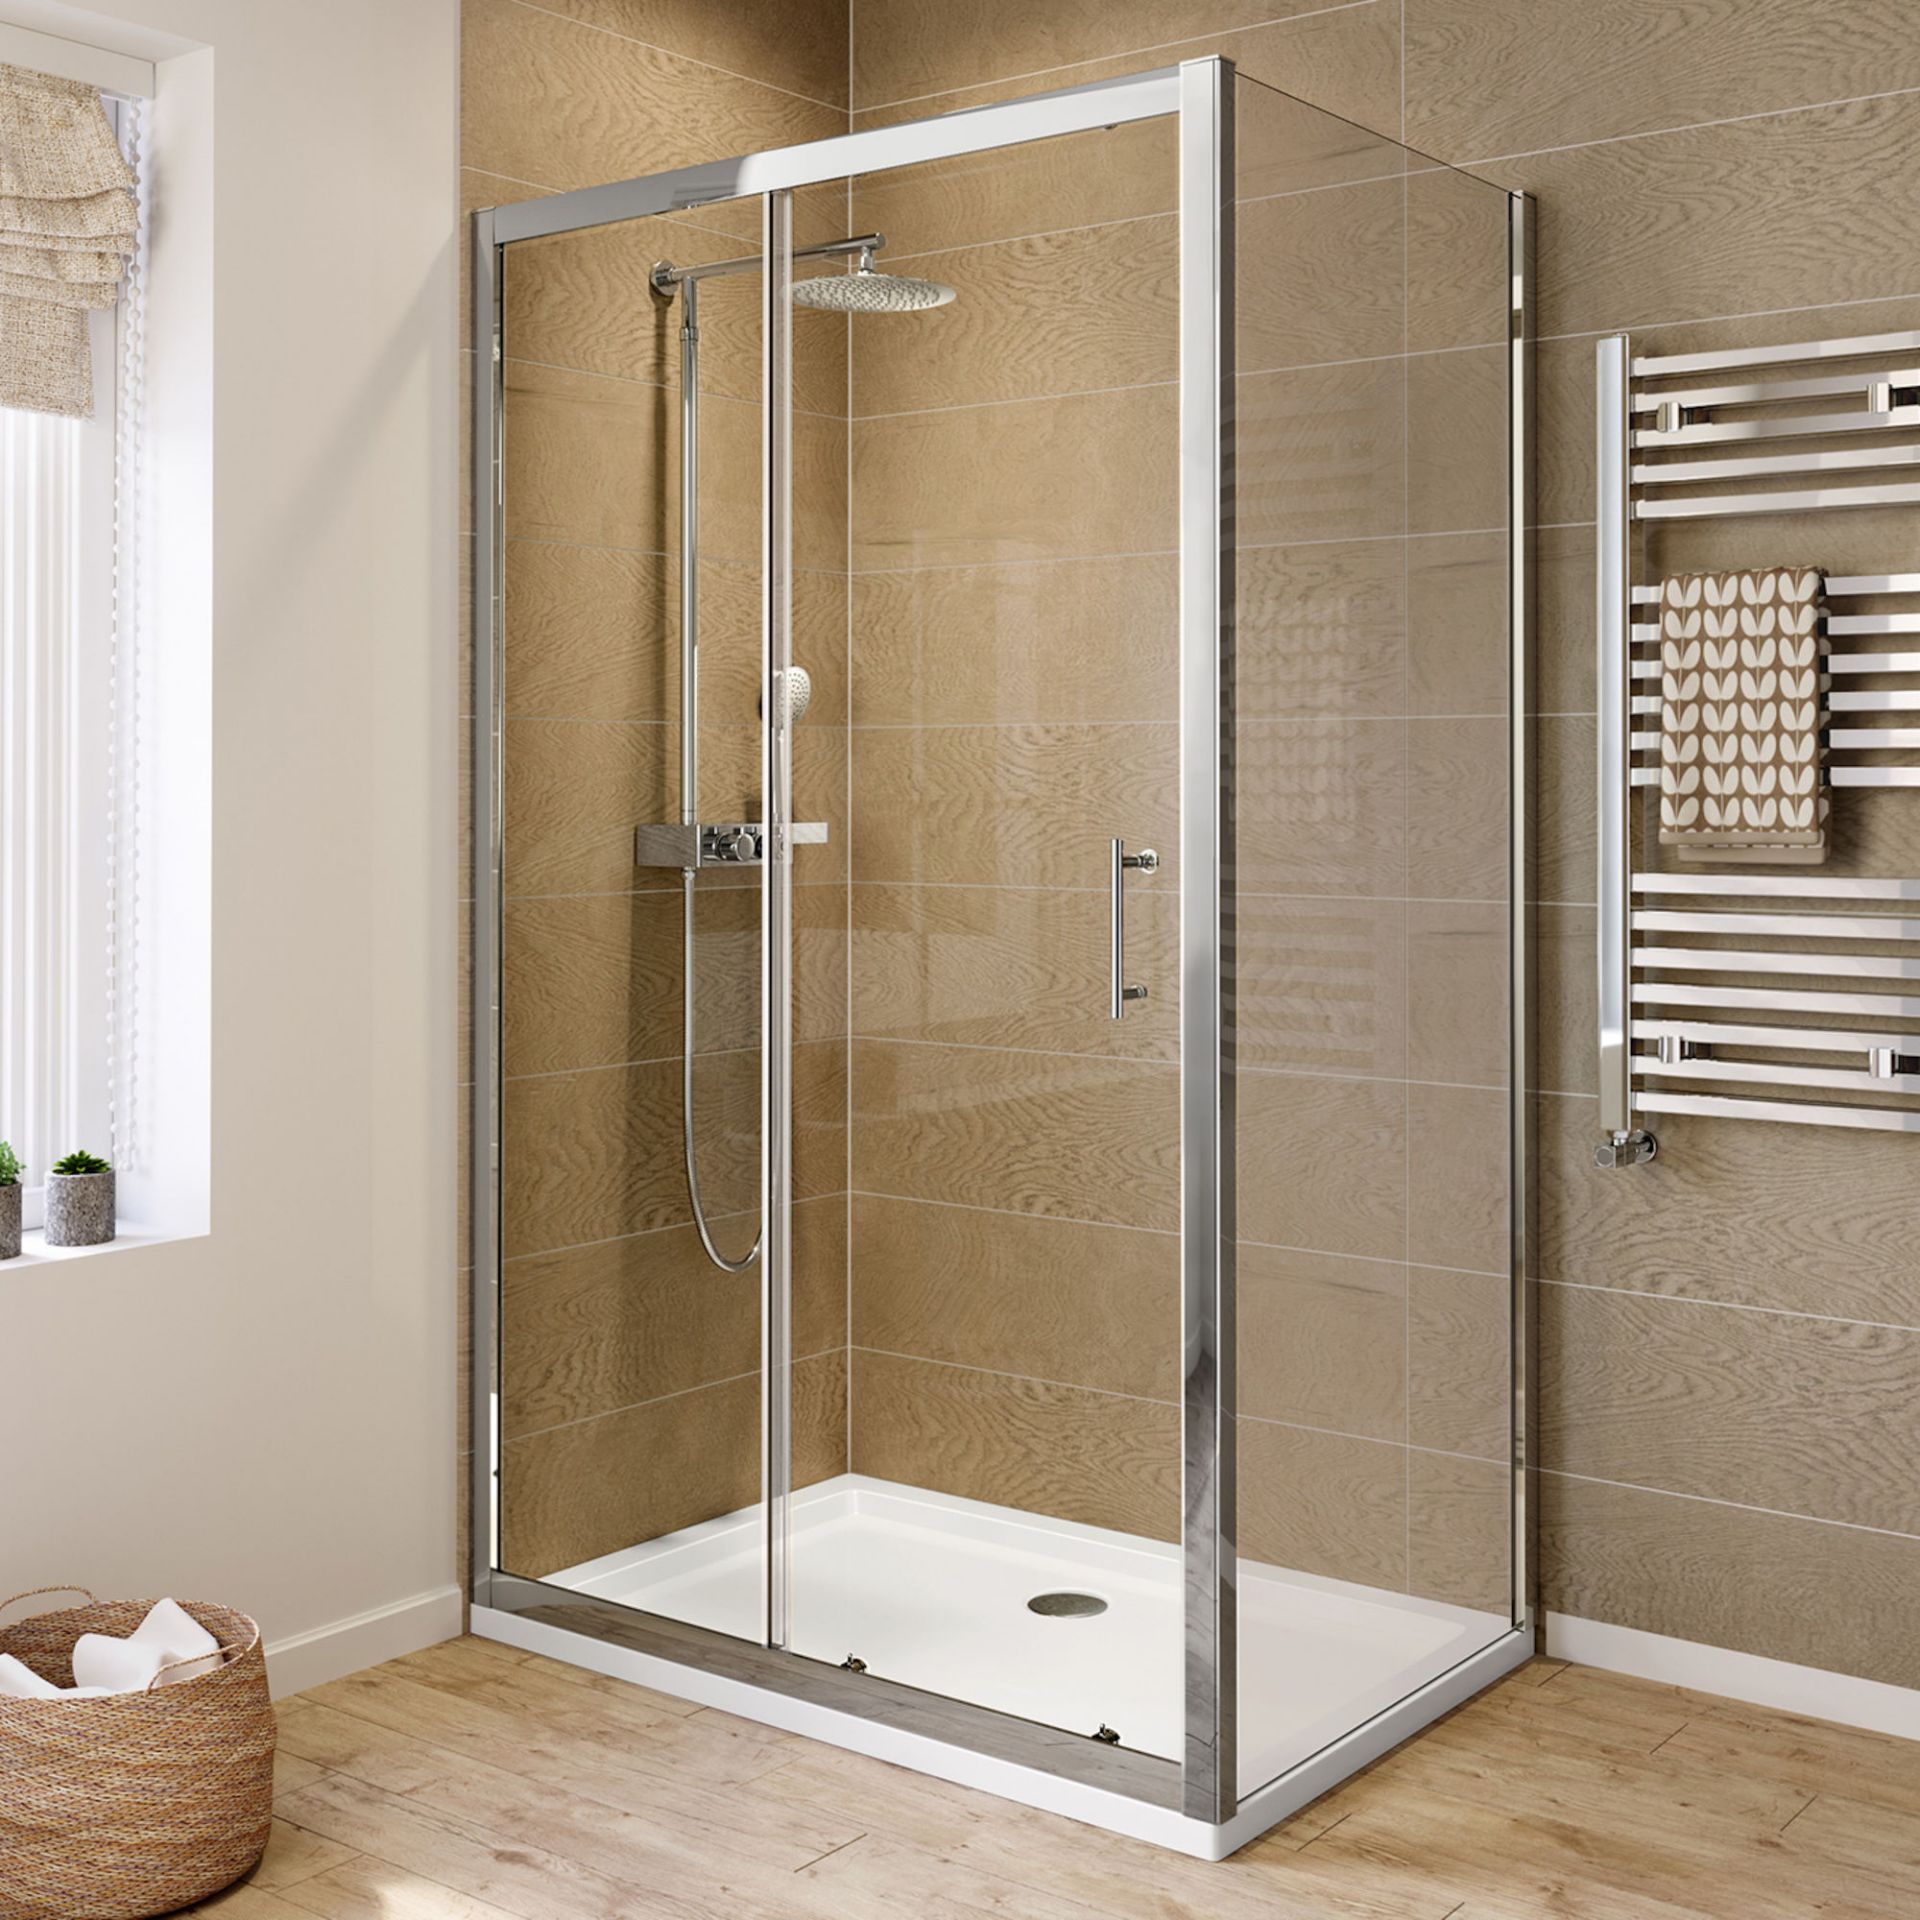 (AA86) 1400x800mm - 6mm - Elements Sliding Door Shower Enclosure. RRP £388.99. 6mm Safety Glas...